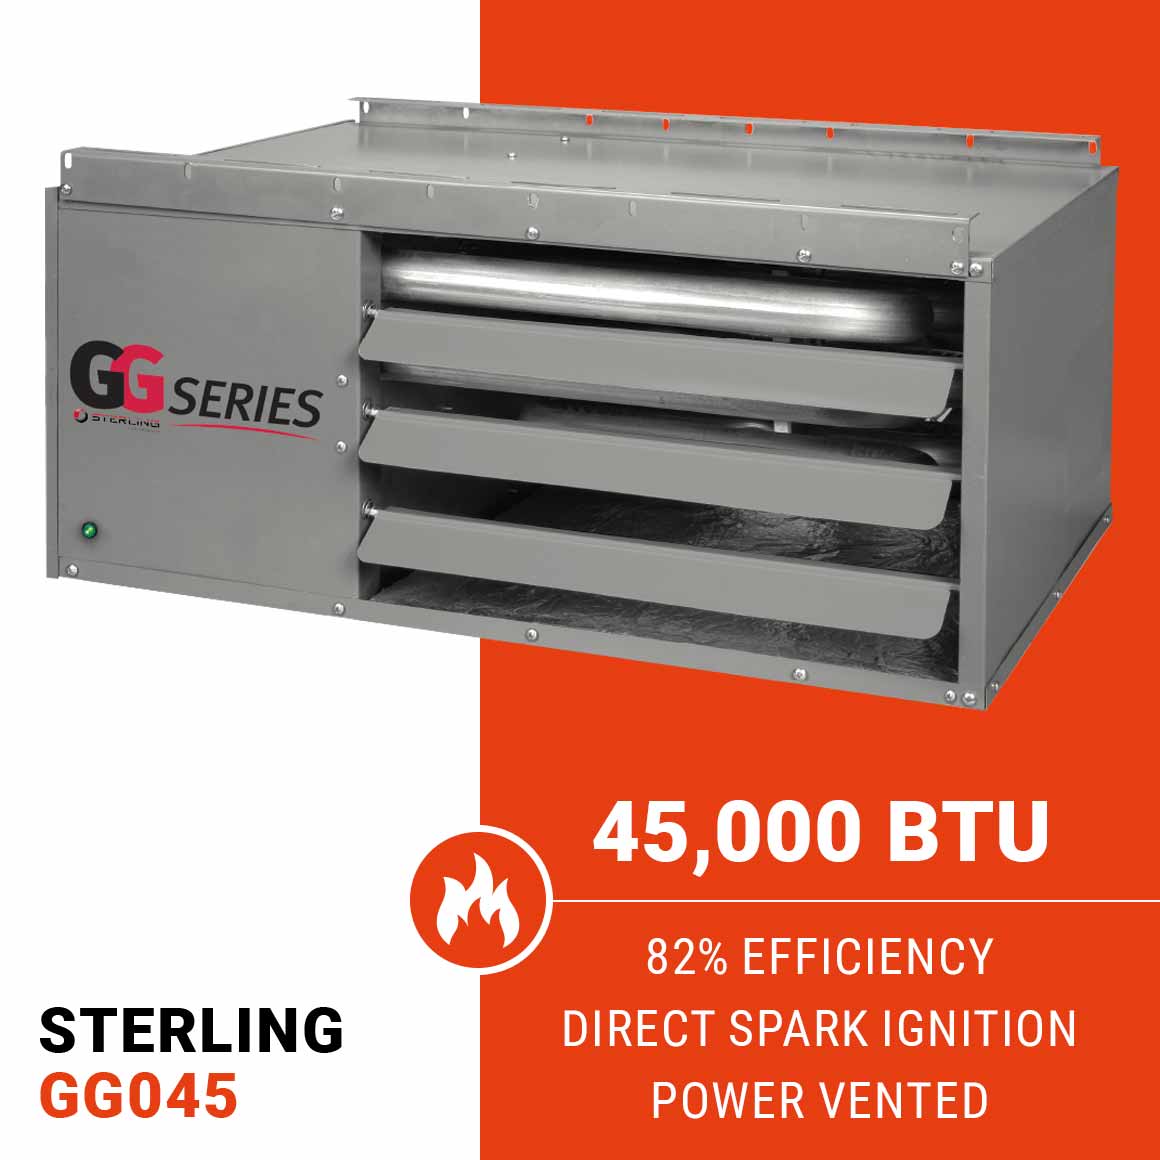 Sterling GG045 Garage Heater